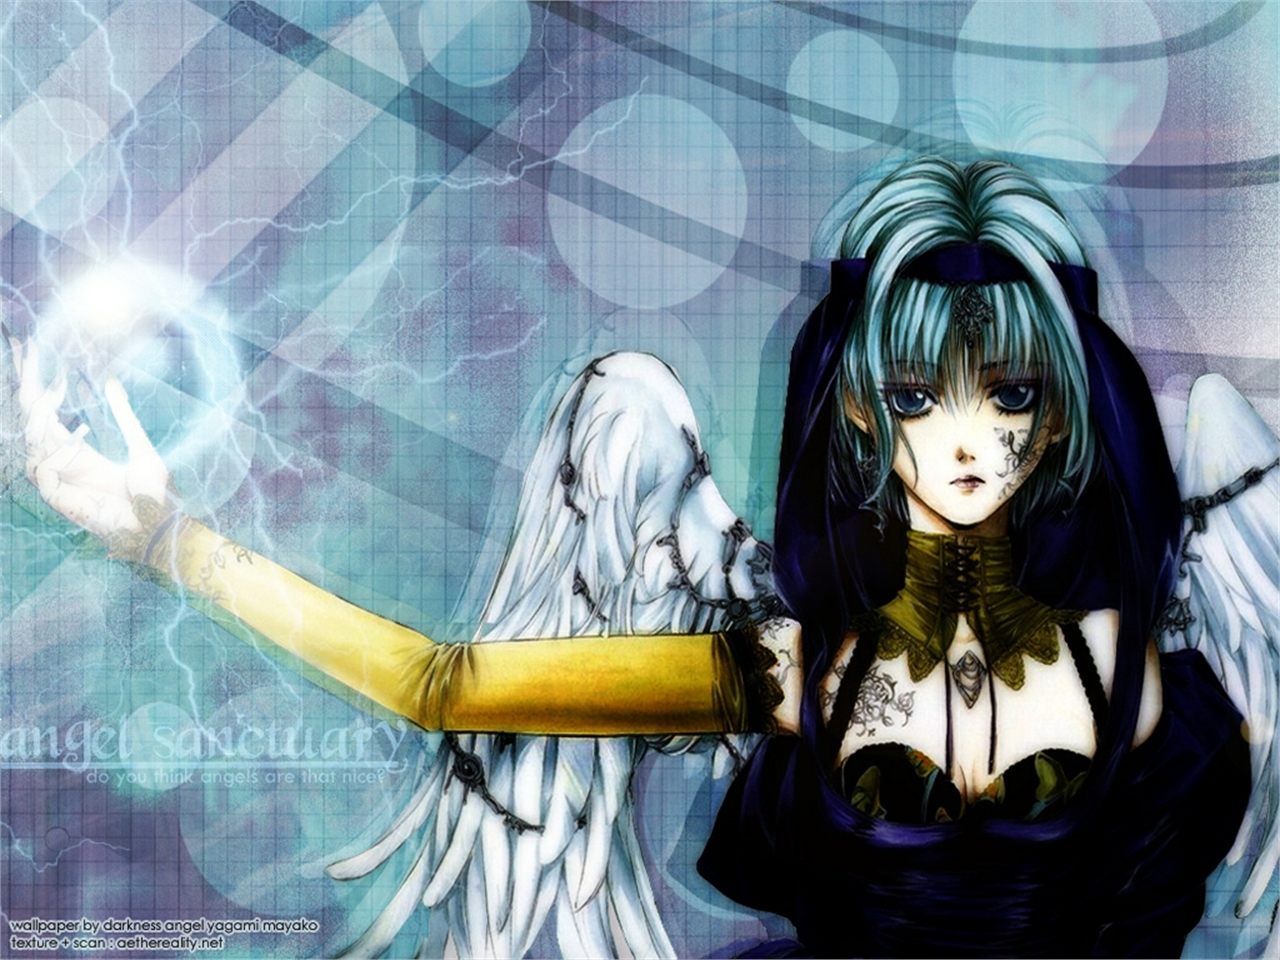 Petition · Angel Sanctuary full anime adaptation · Change.org